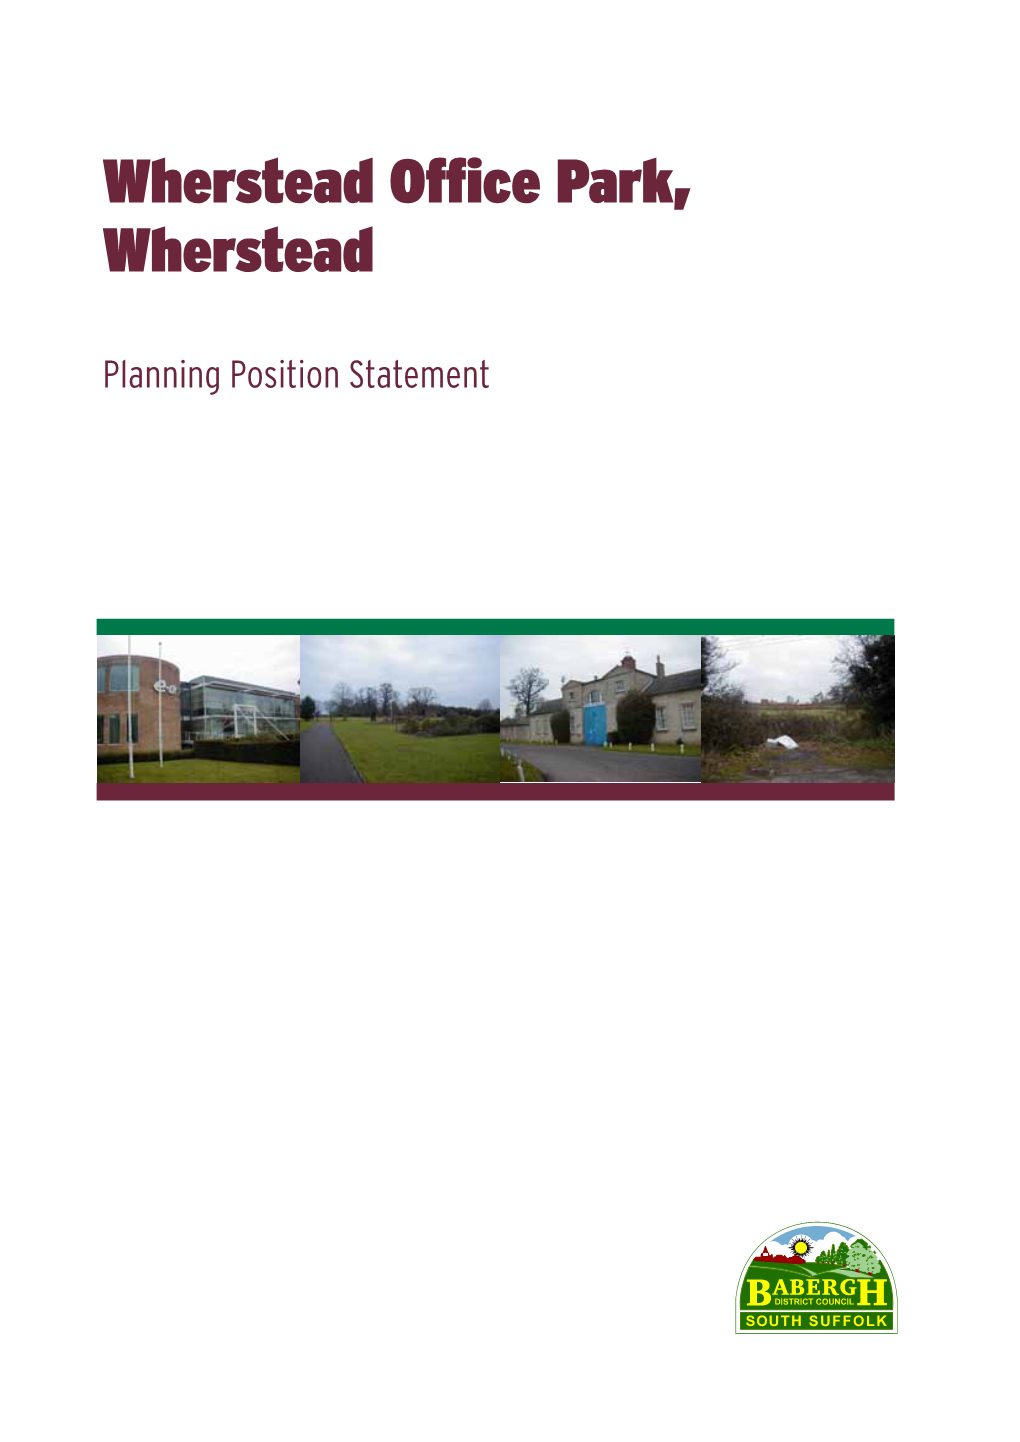 Wherstead Office Park Planning Position Statement